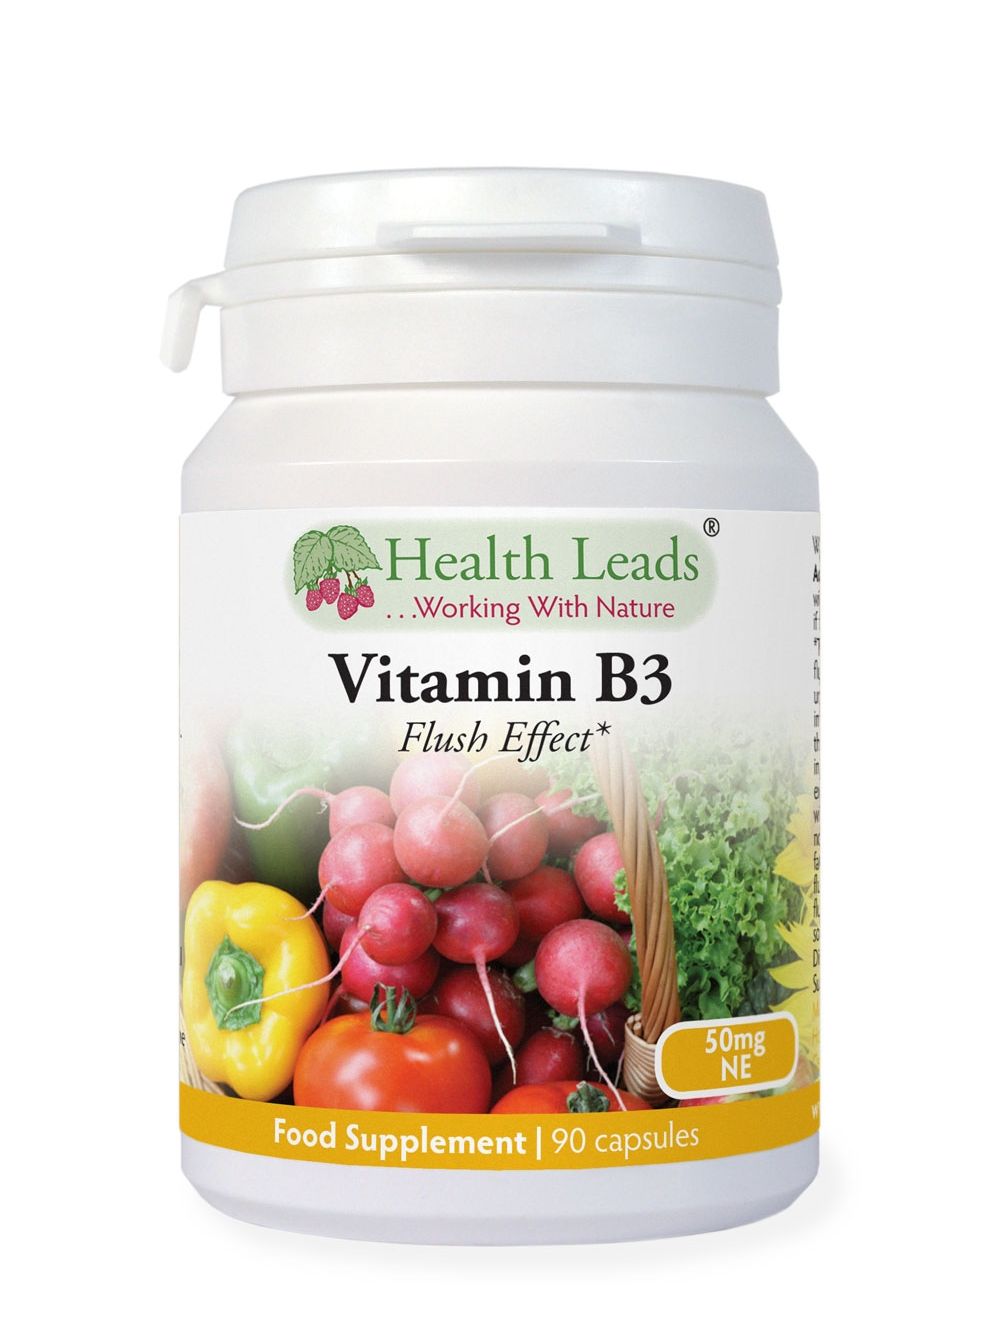 Vitamin B3 and the niacin flush